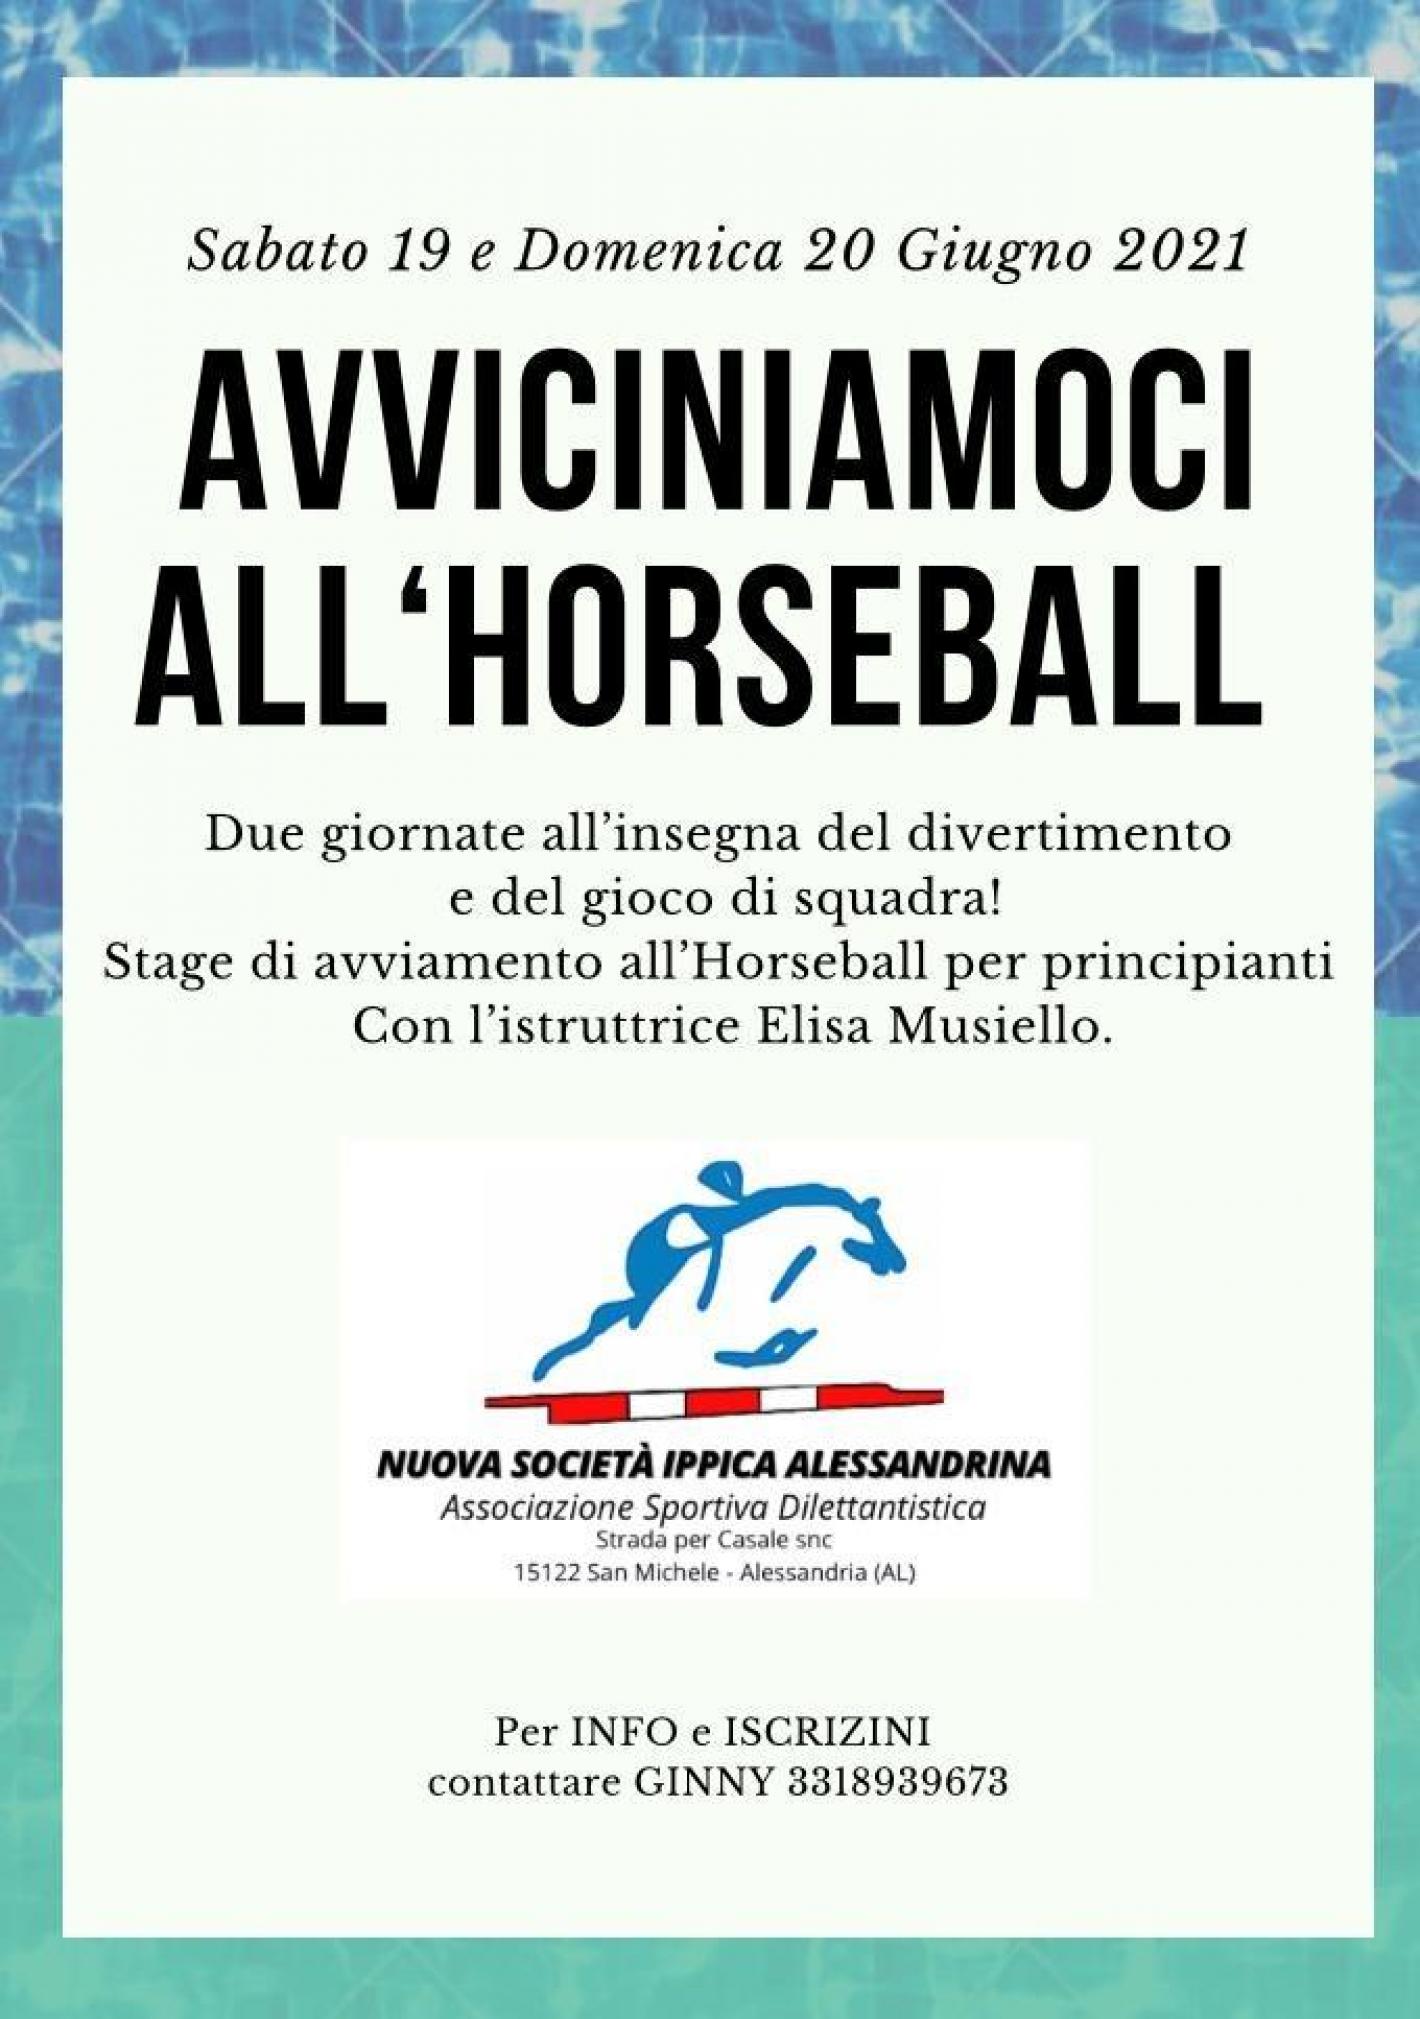 images/joomgallery/details/piemonte_17/medium/stage_horseball_20210611_1140831079.jpg